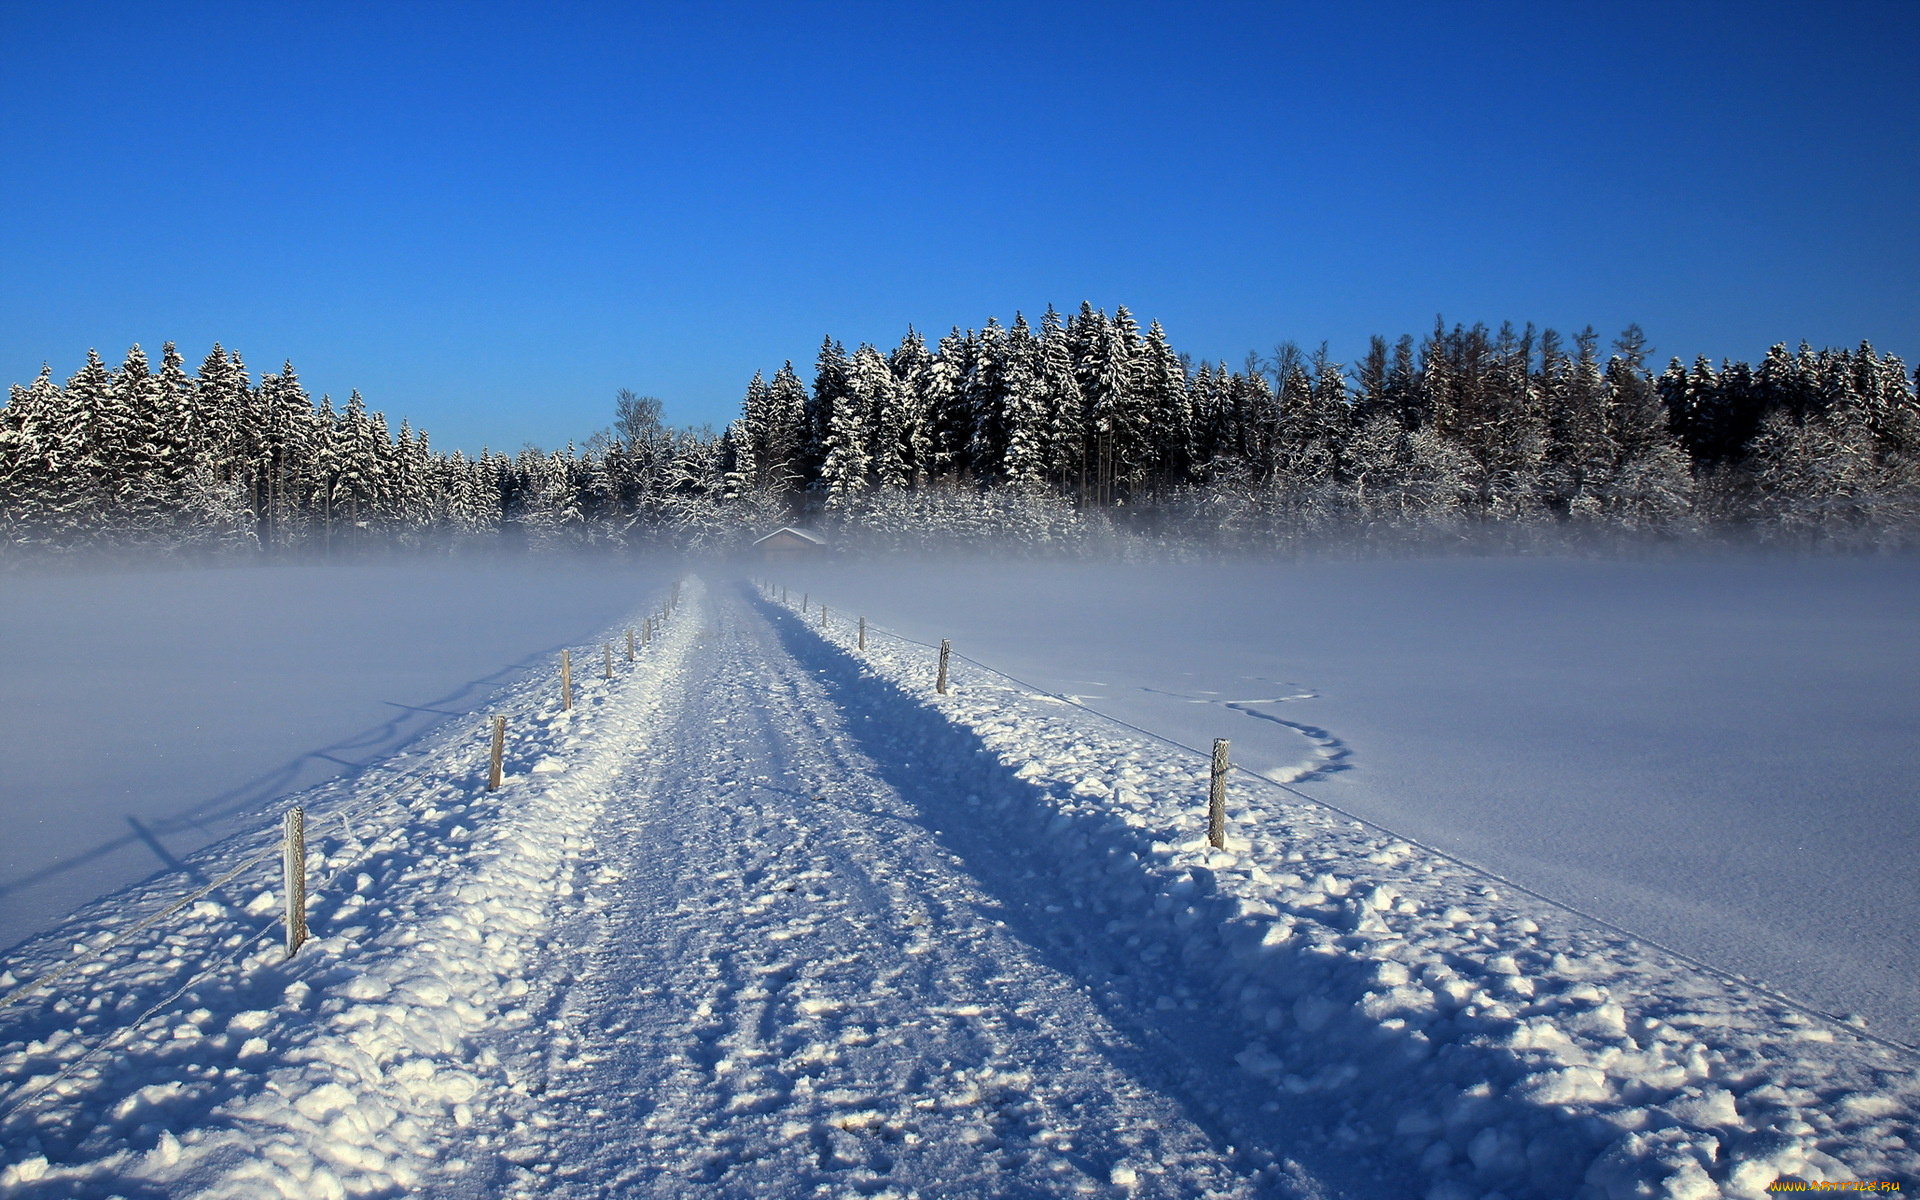 Тема зимней дороги. Снежная дорога. Зимнее поле. Зима дорога. Заснеженная дорога.